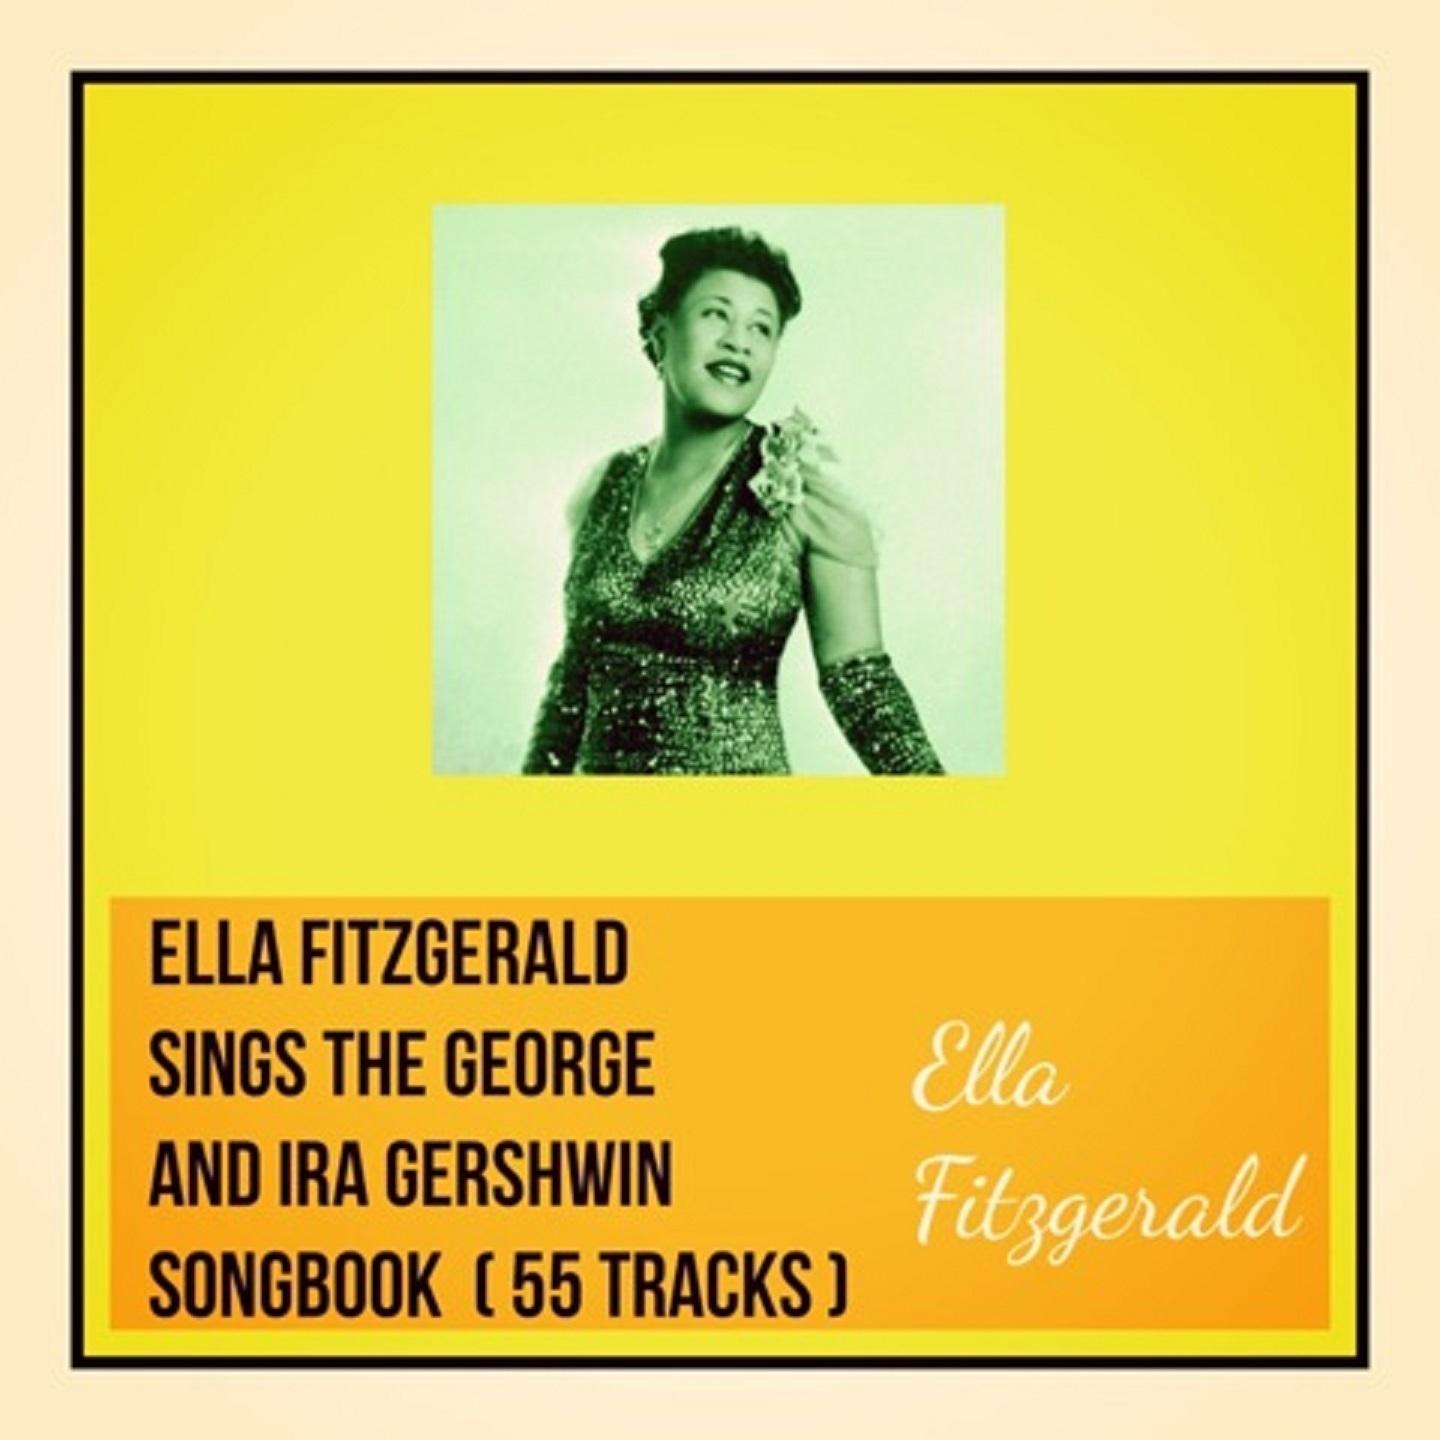 Ella Fitzgerald Sings the George and Ira Gershwin Songbook (55 Tracks)